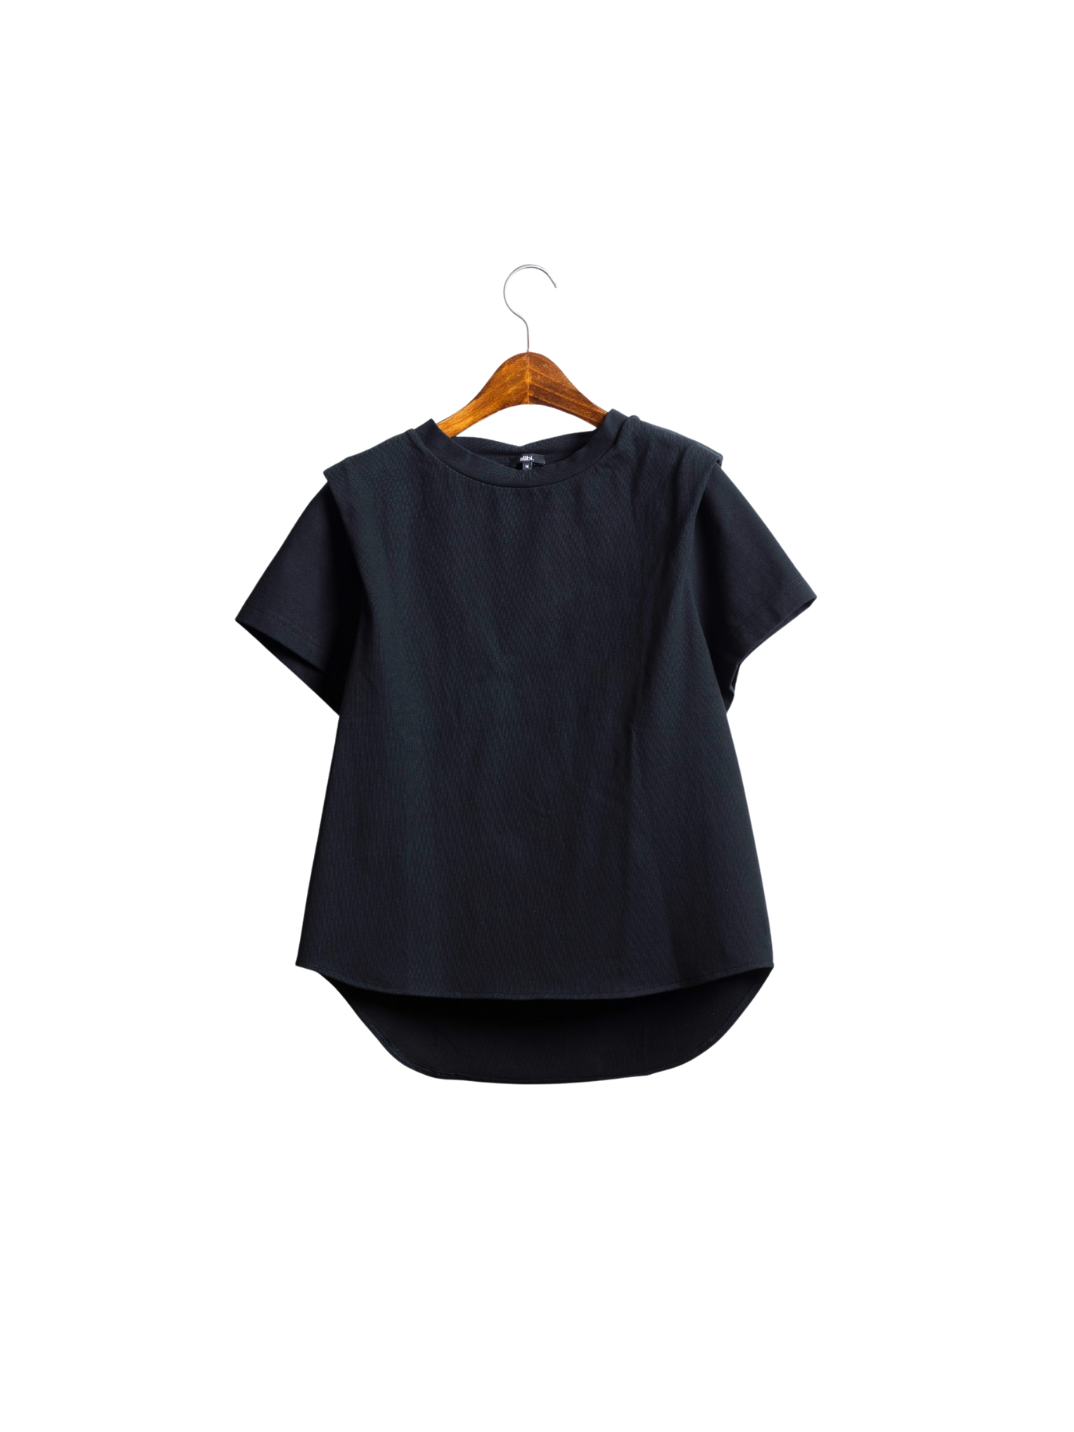 black tee plain t-shirt sustainable eco-friendly fashion